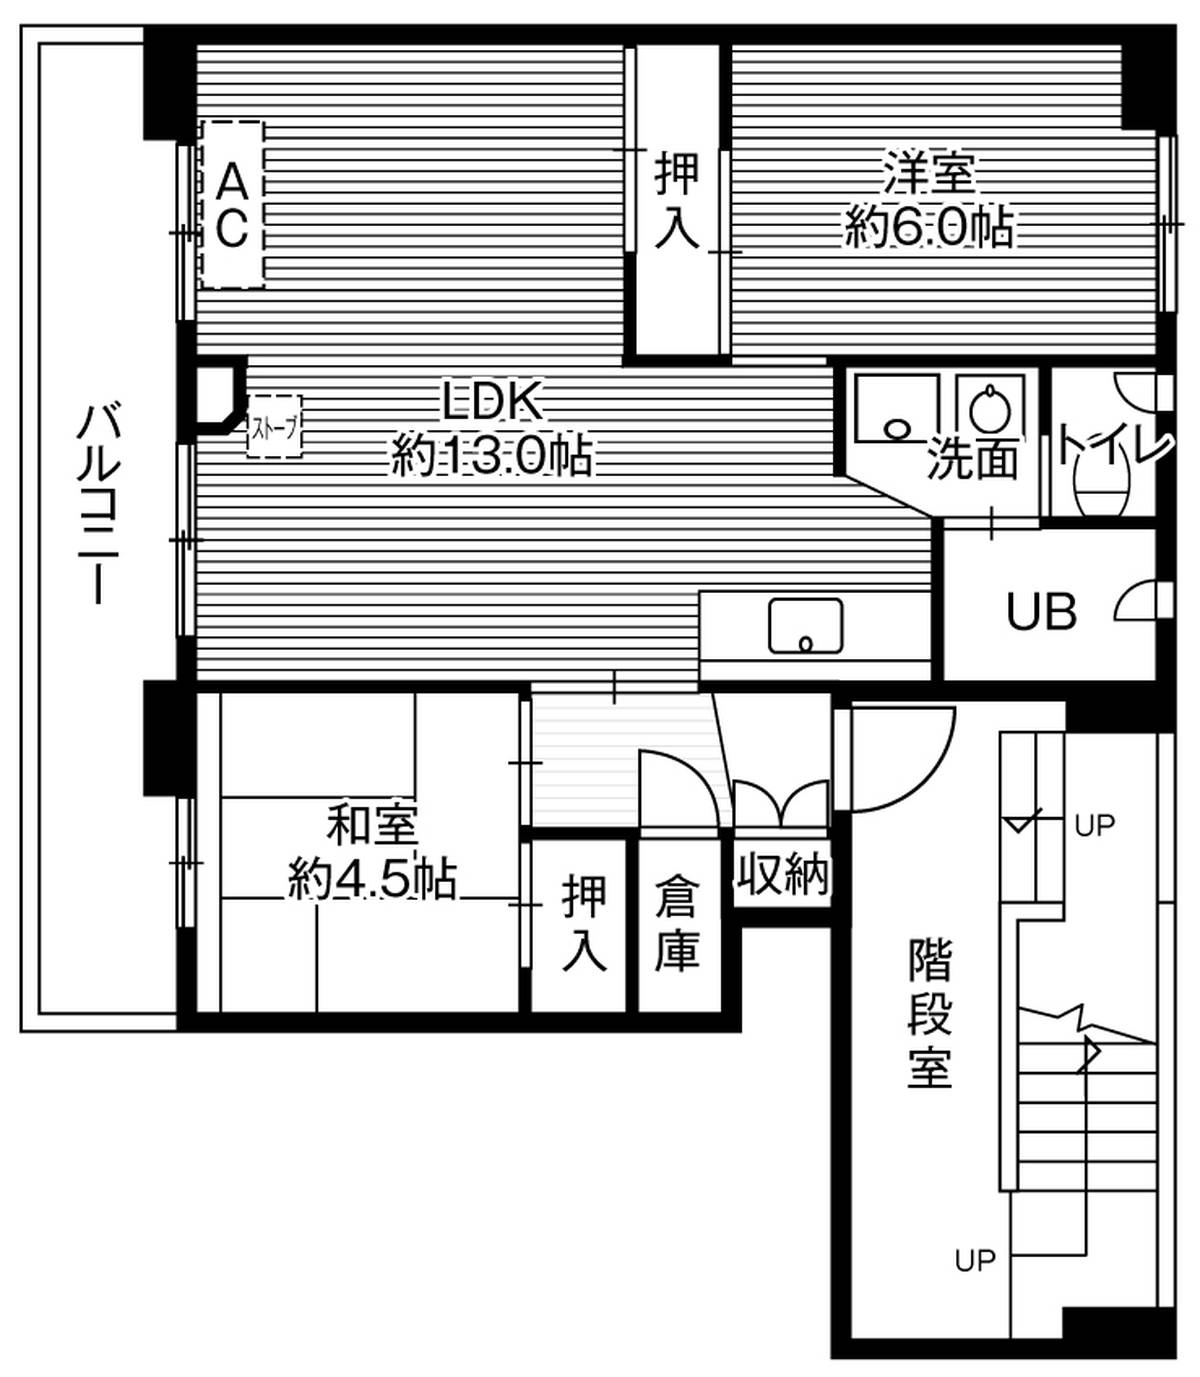 2LDK floorplan of Village House Ebetsu in Ebetsu-shi